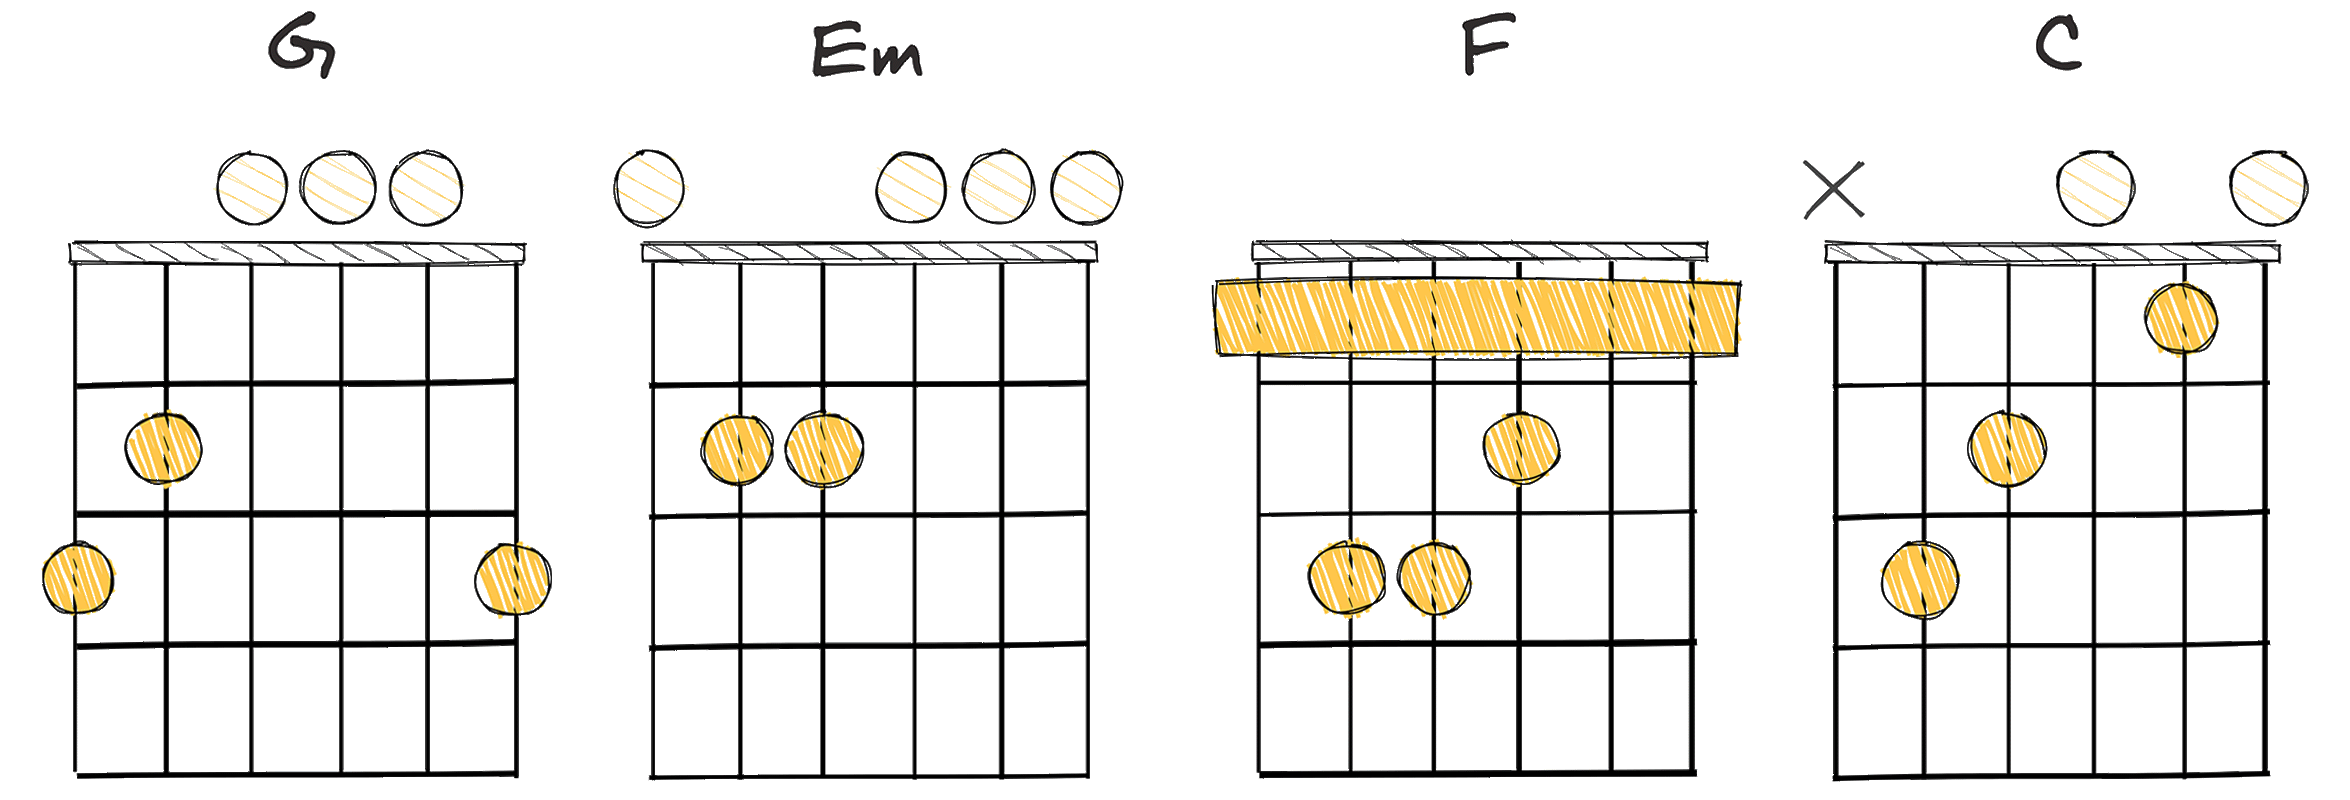 V-iii-IV-I (5-3-4-1) chords diagram